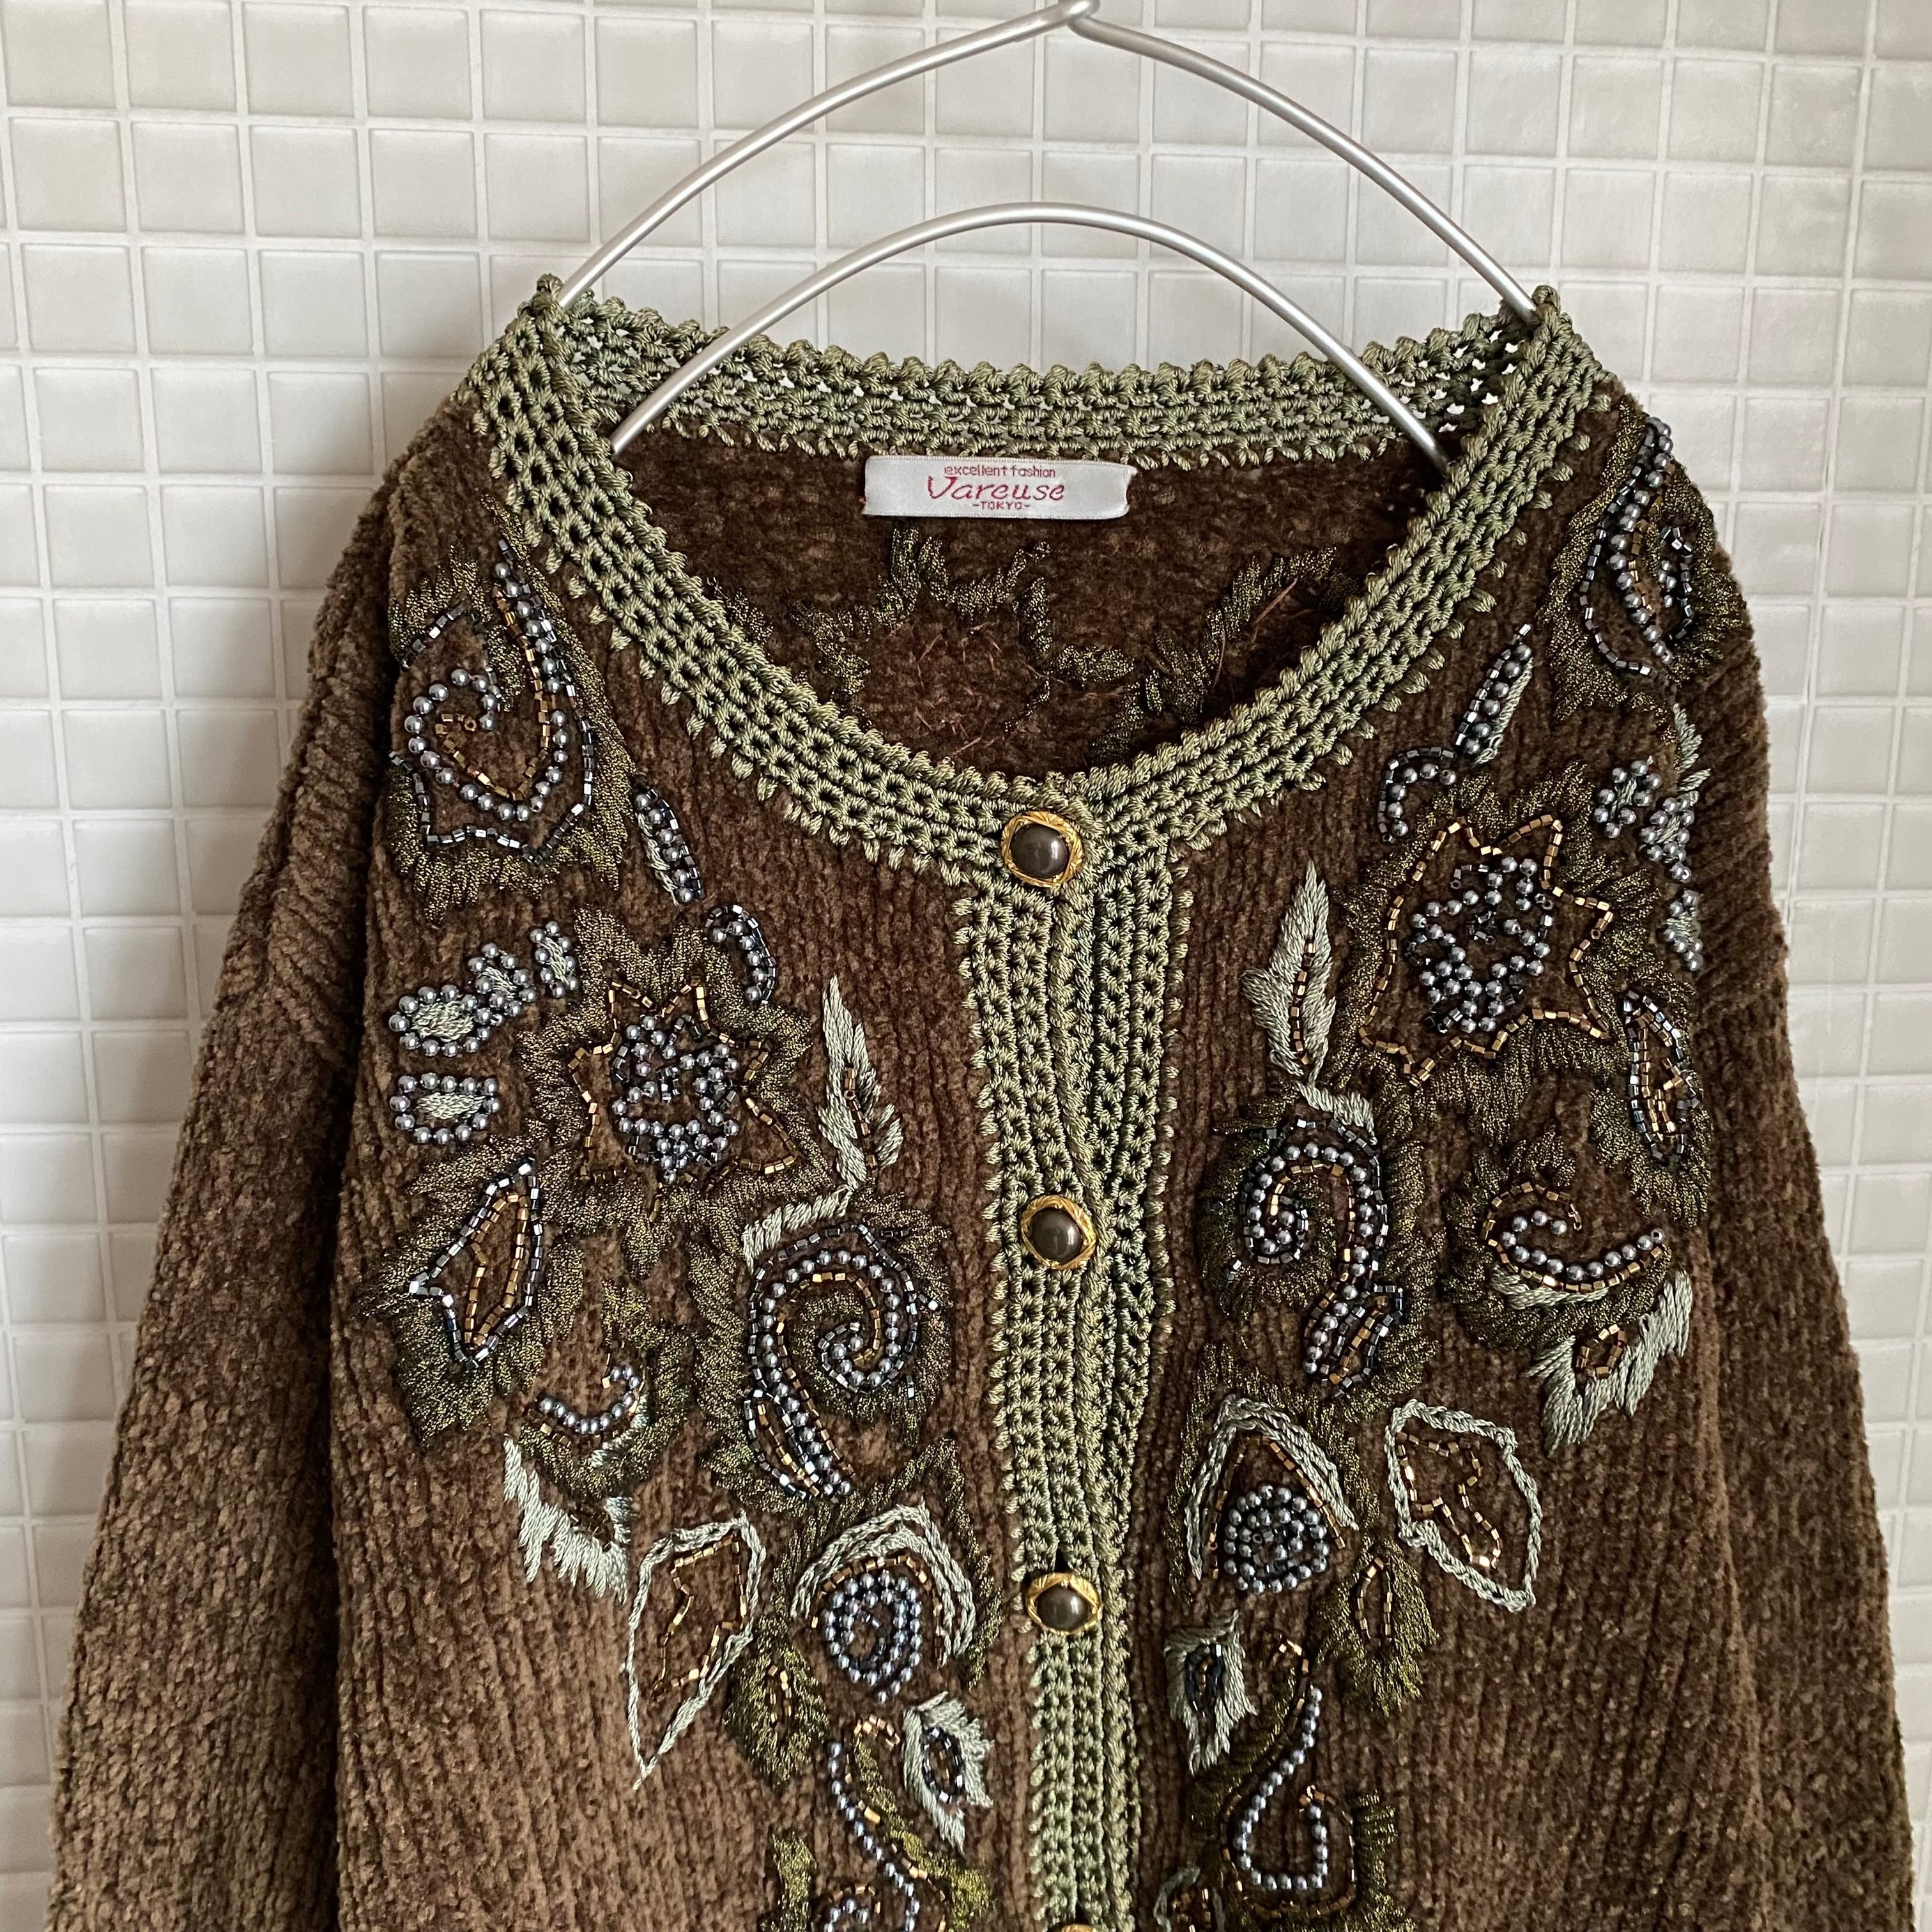 Vintage 70s〜80s retro botanical beads embroidery knit cardigan ...